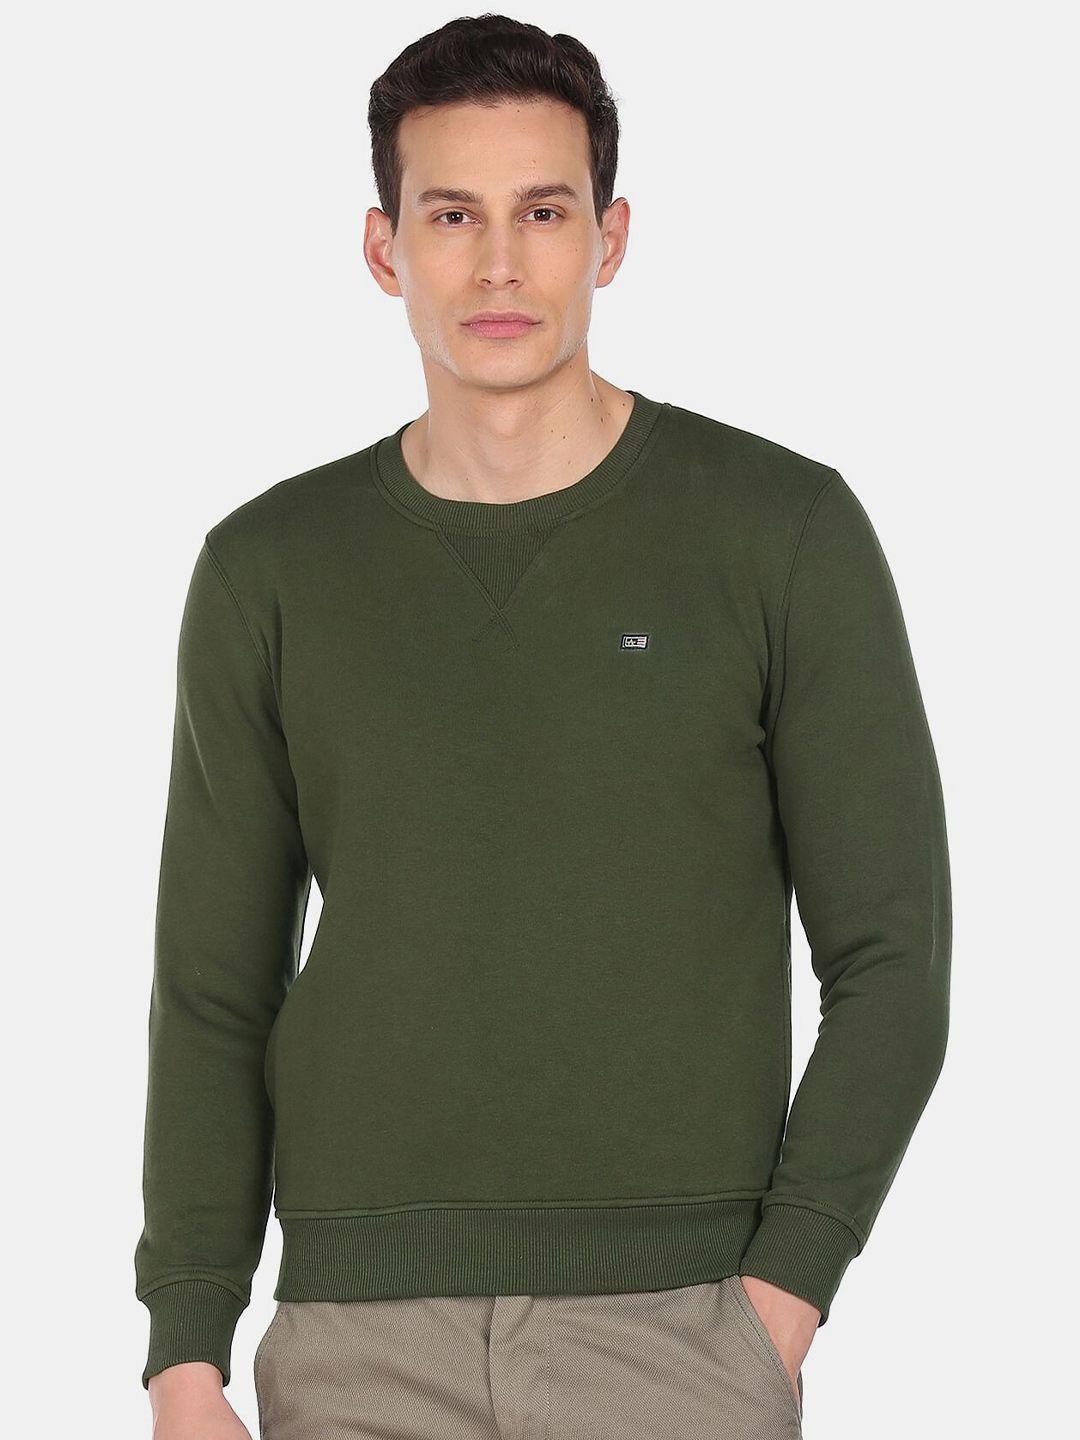 arrow sport men green sweatshirt